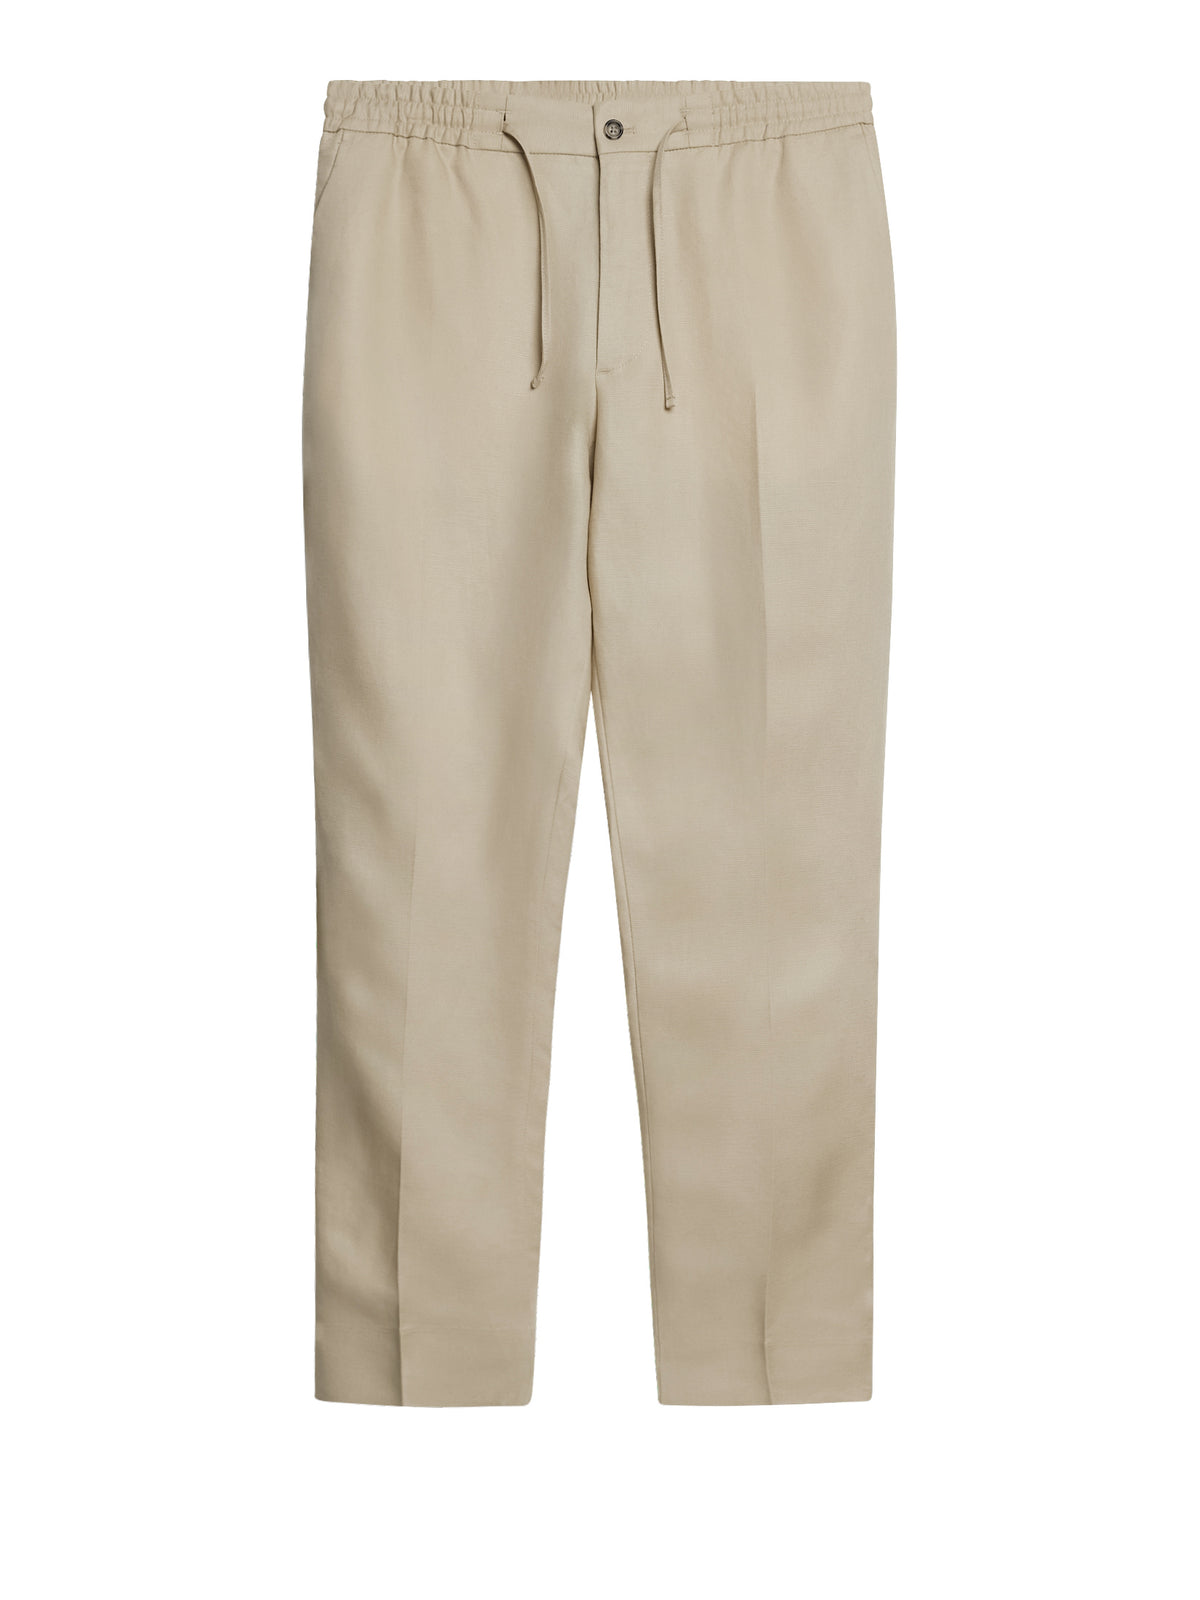 Baron Tencel Linen Pants / Safari Beige